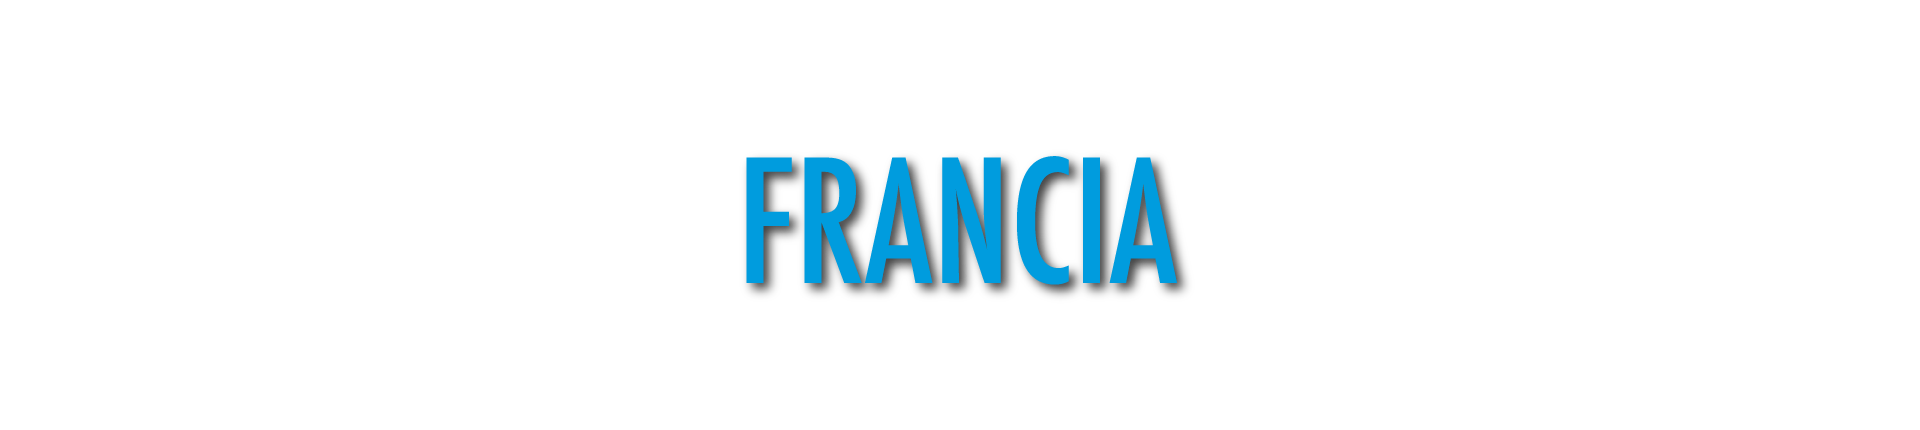 Francia-banner-3